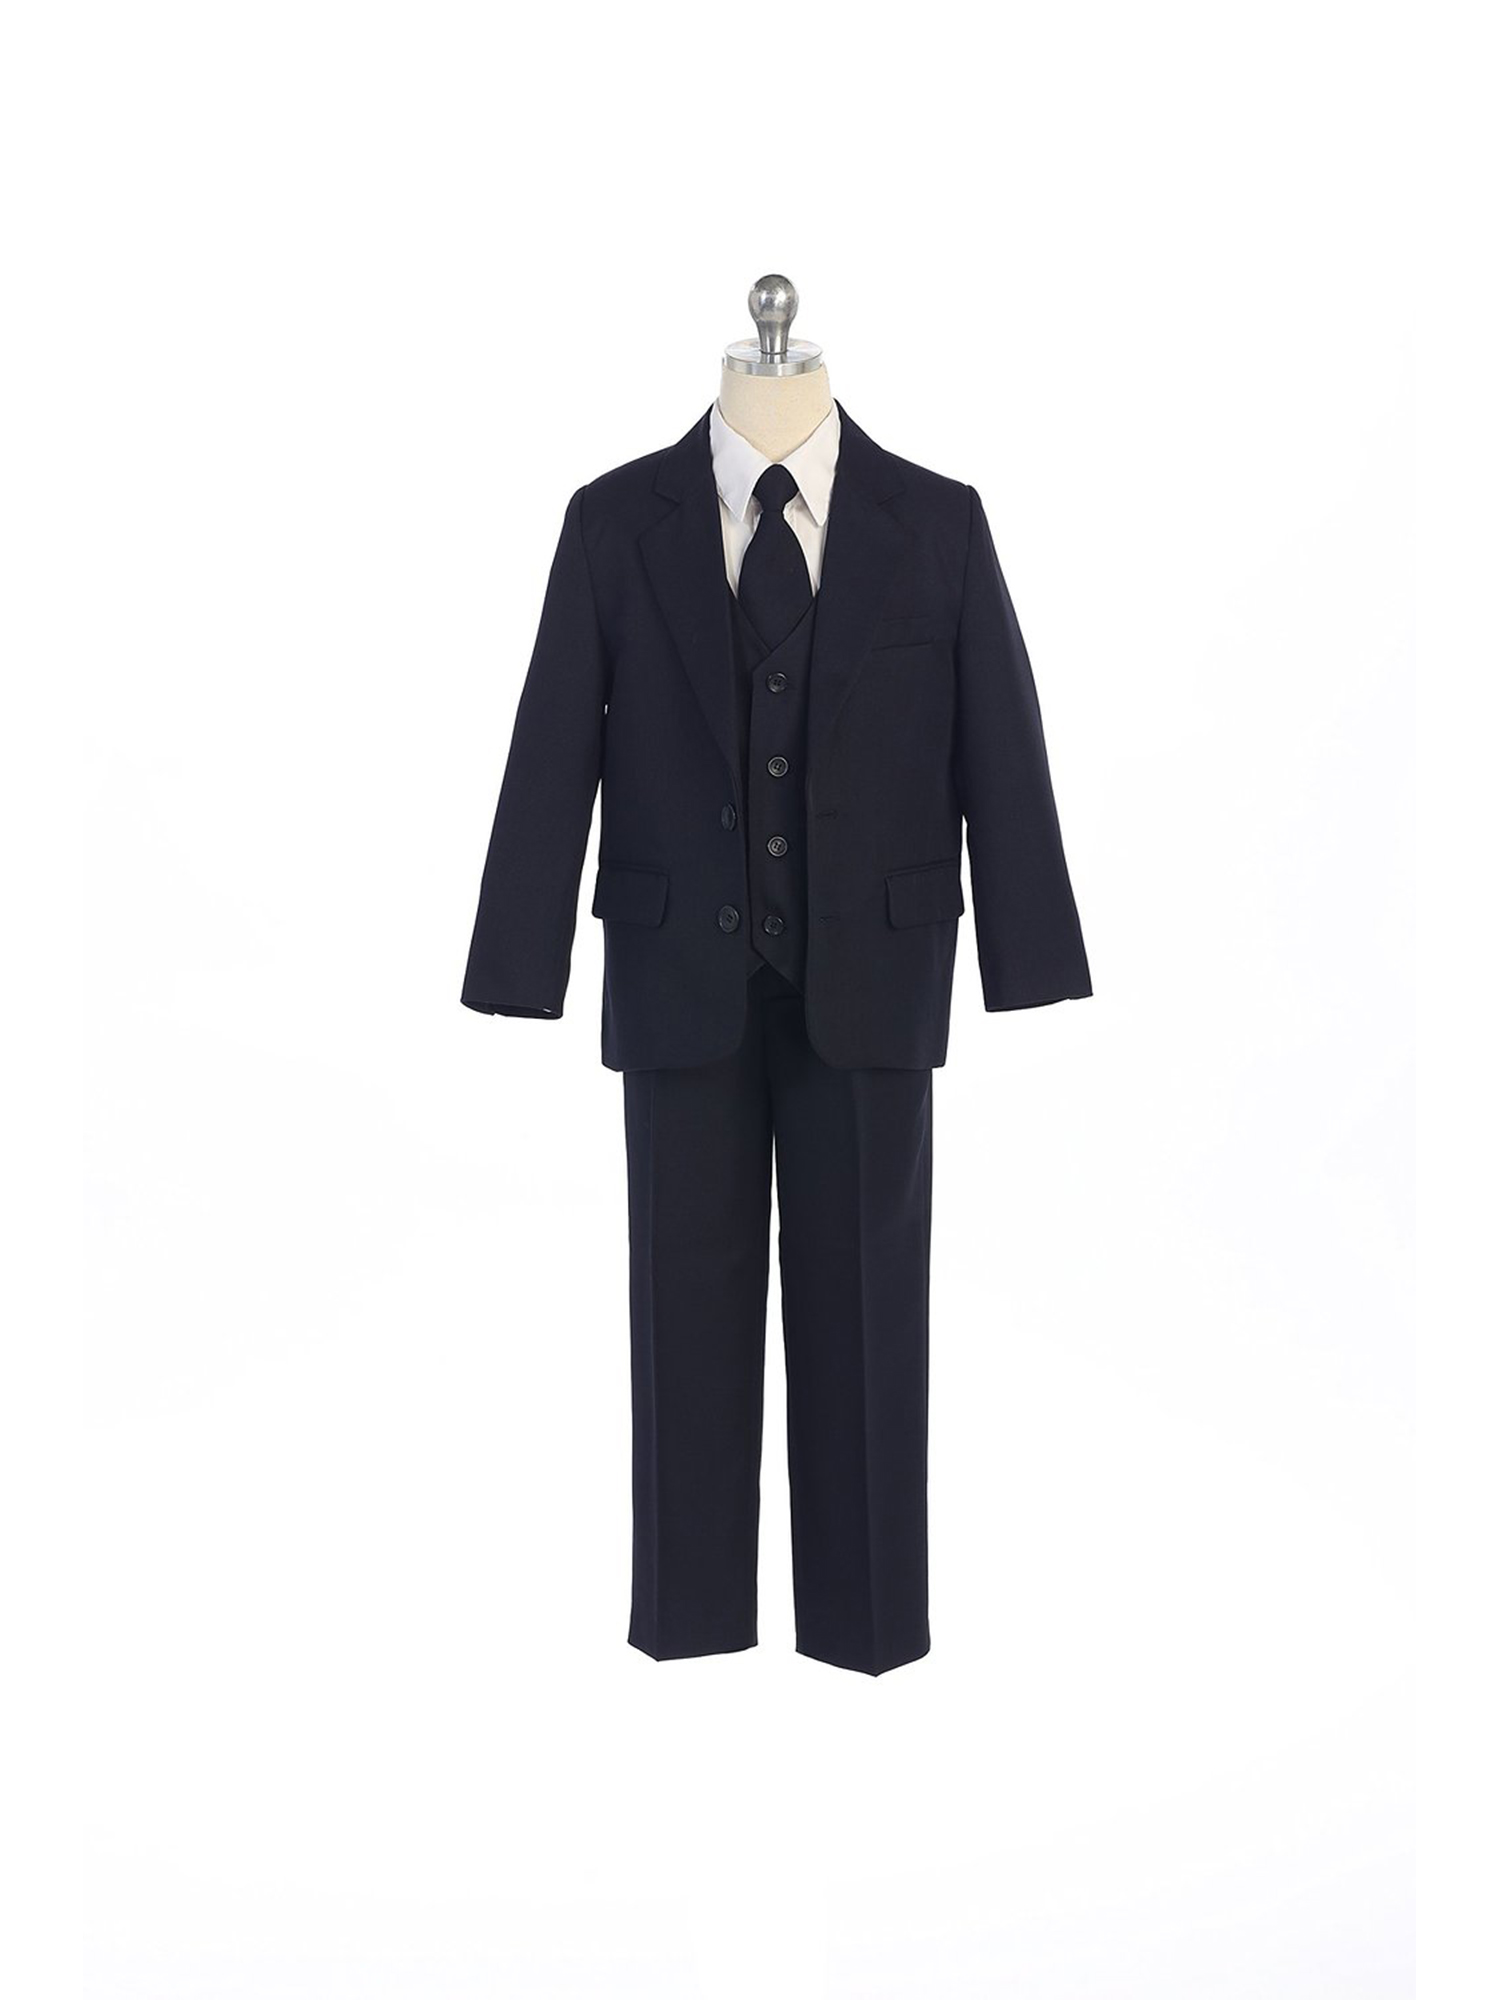 COLE Boys Suit with Shirt and Vest (5-Piece) - Navy Blue - Size 20